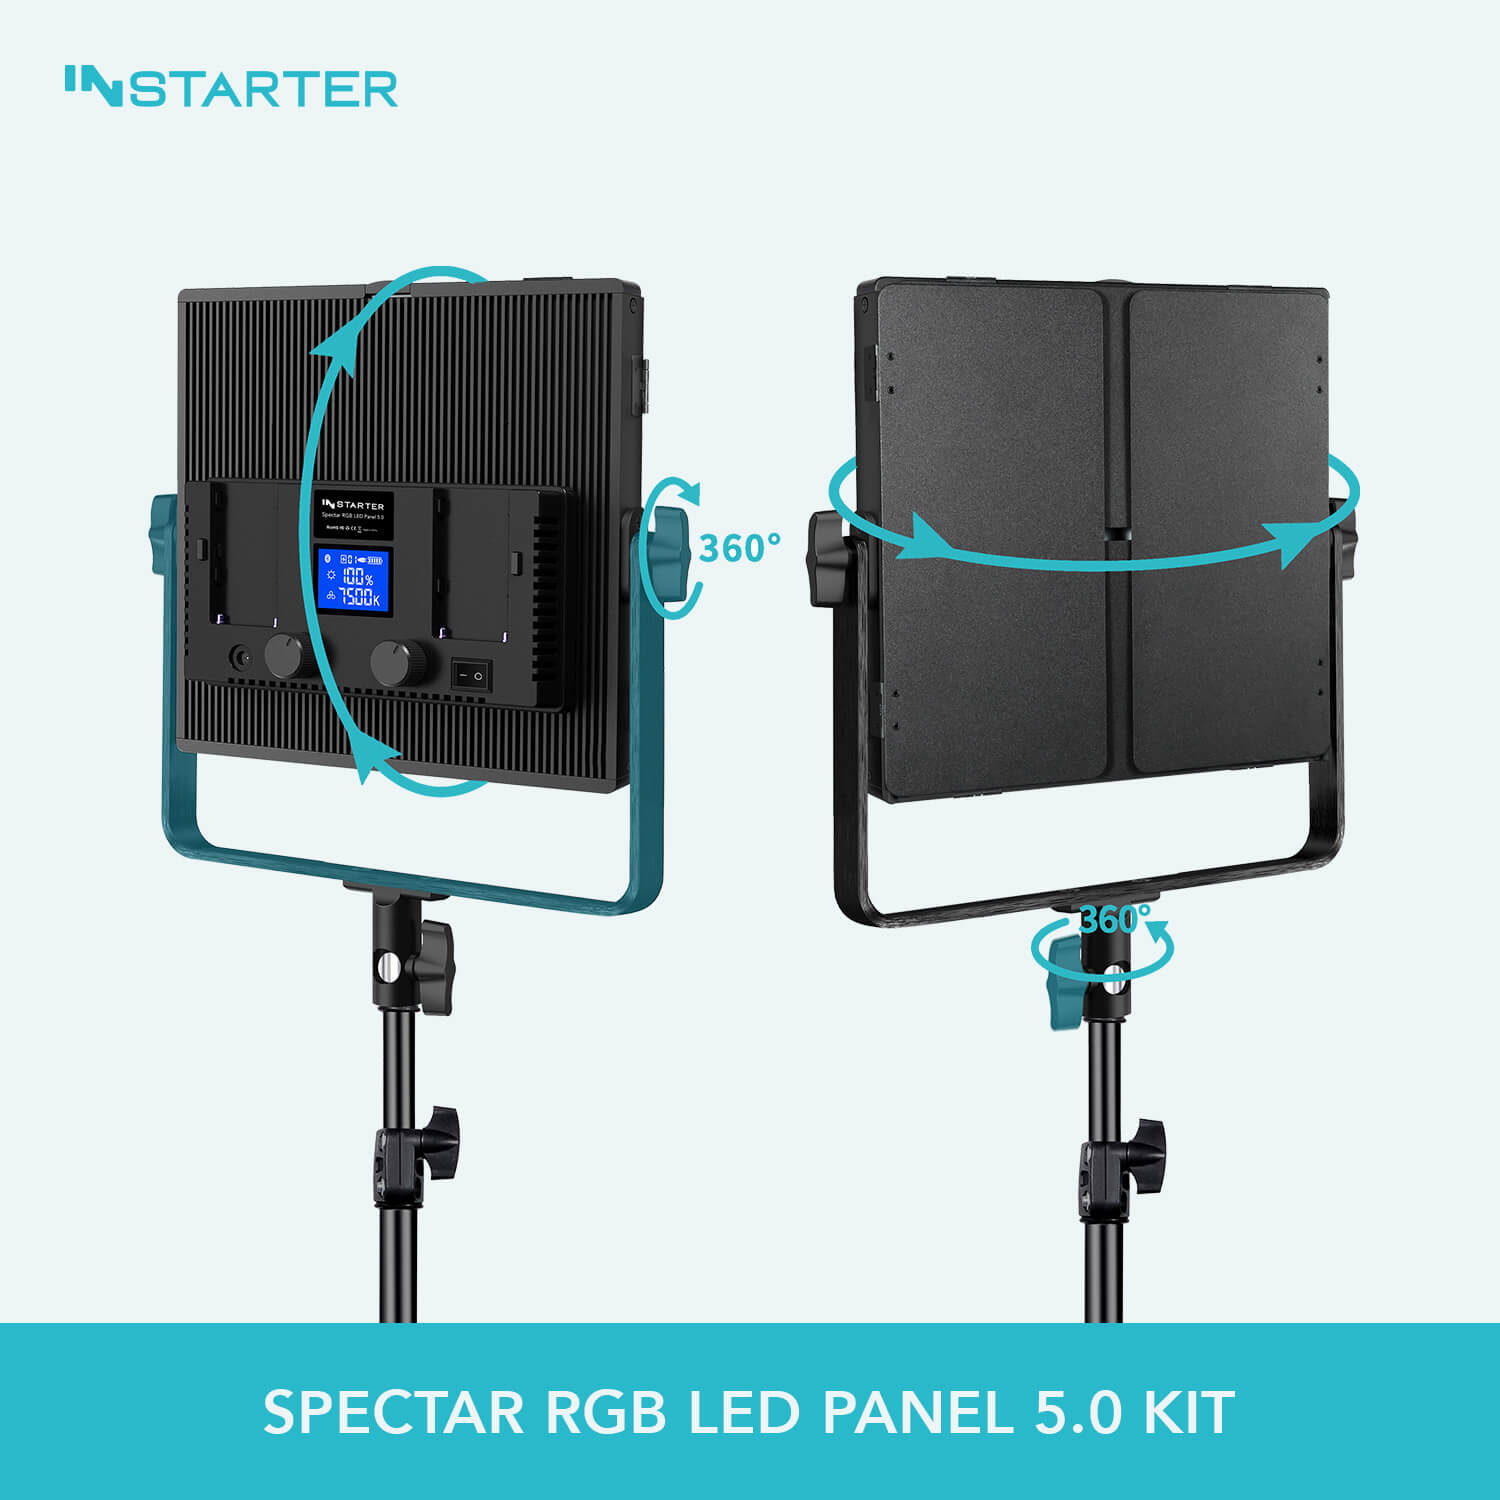 INStarter Spectar RGB LED Panel 5.0 Kit Mounting